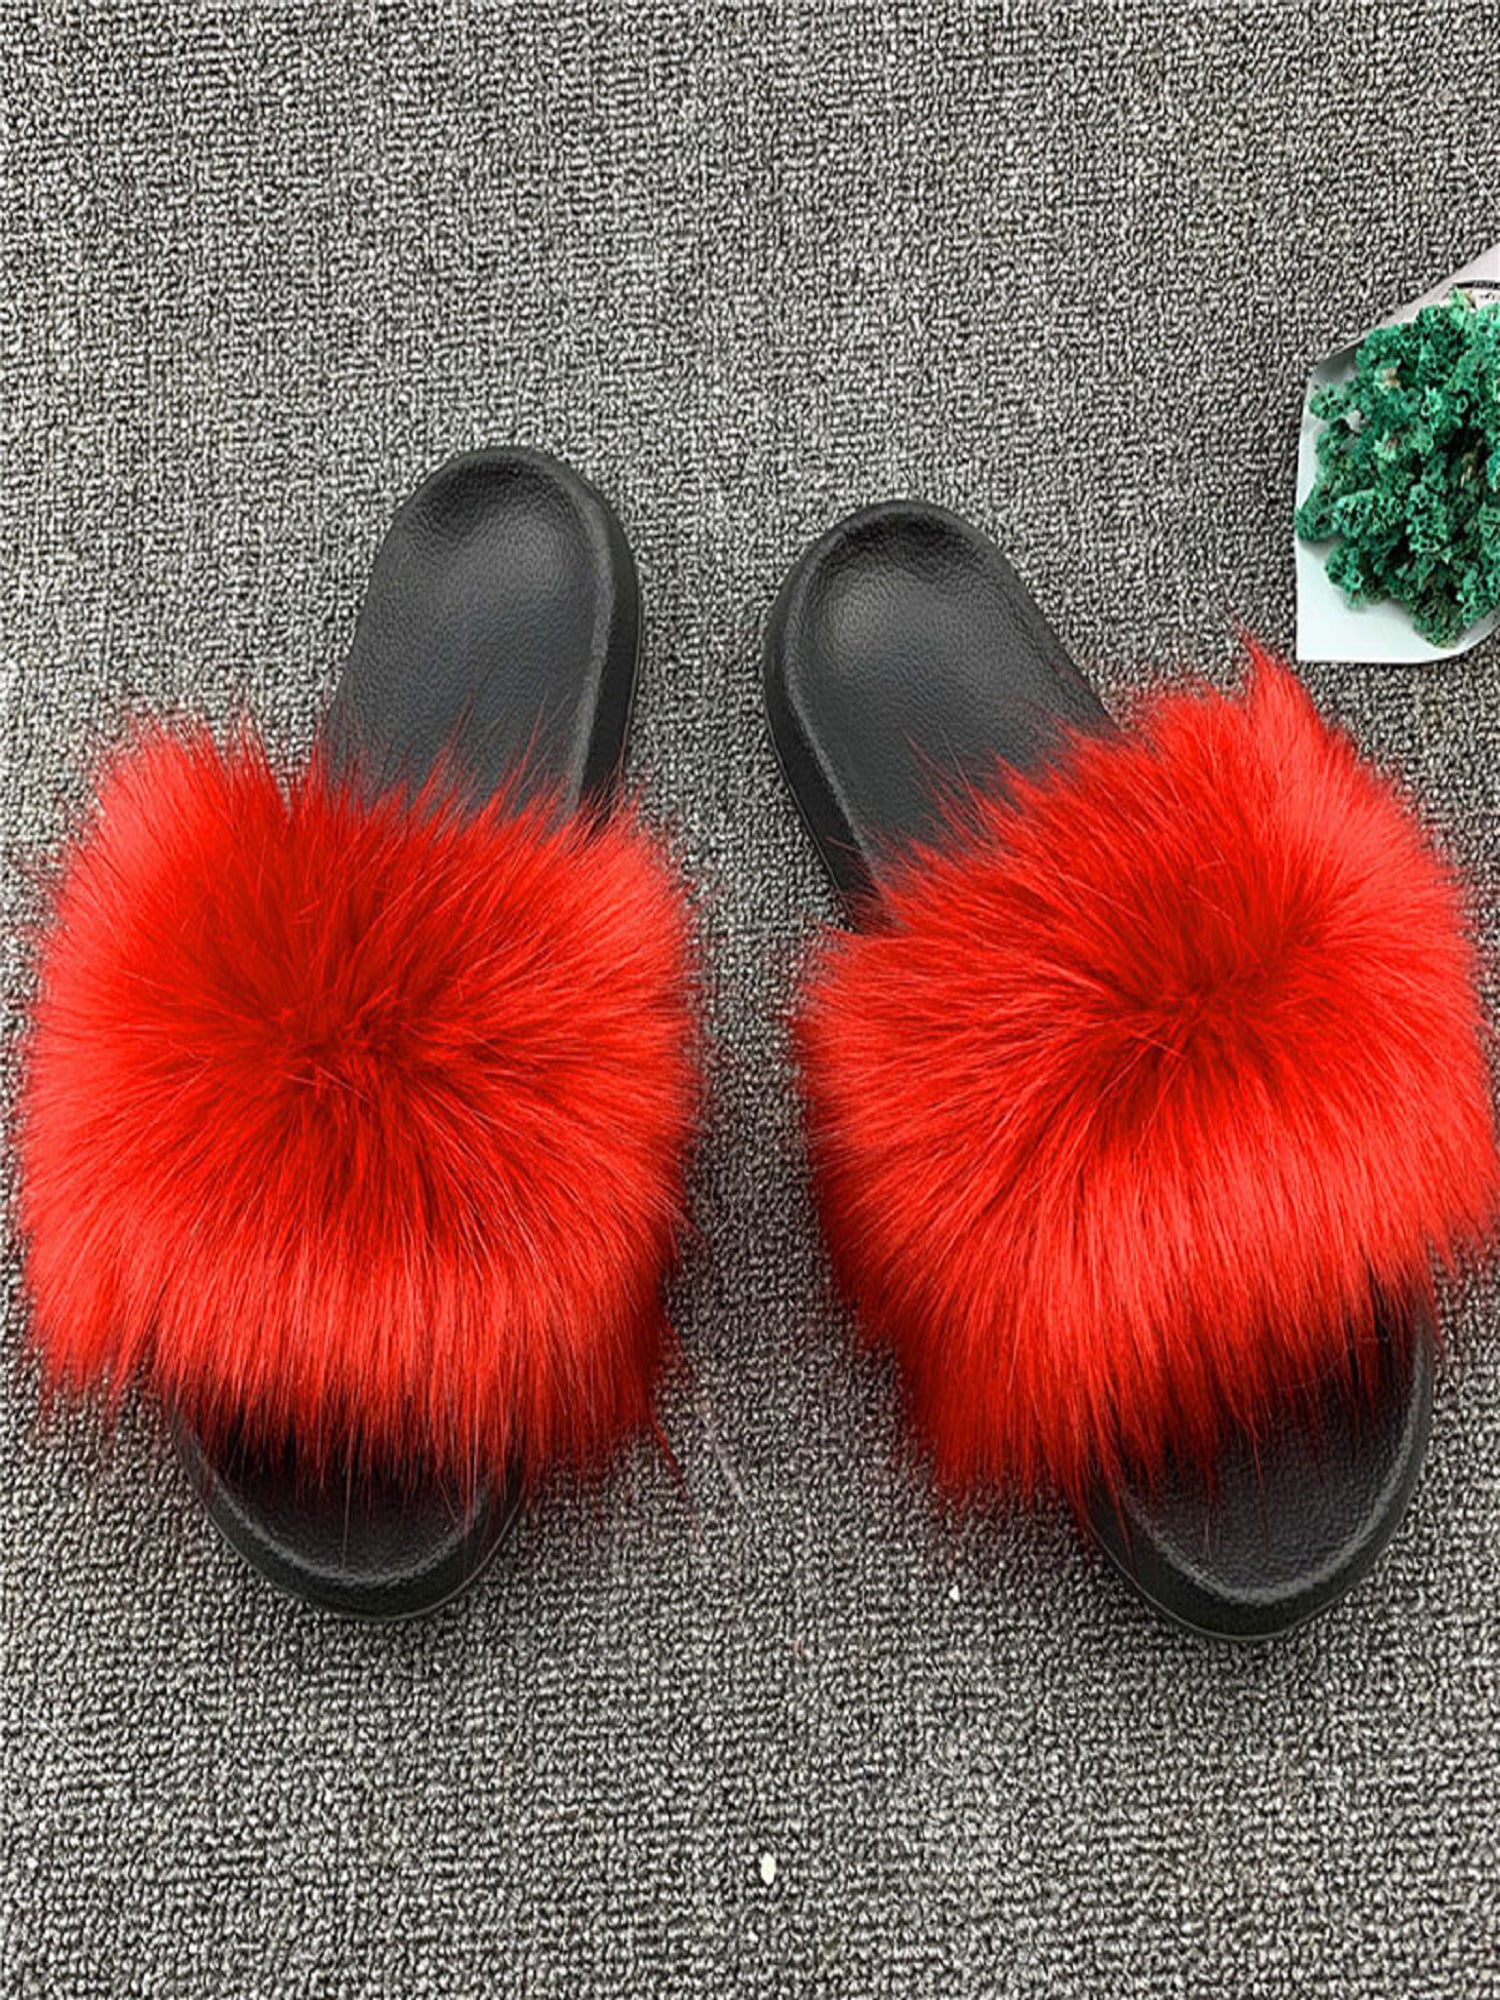 Women's Fox Fur Slides Fuzzy Furry Slippers Comfort Sliders Sandals Shoes Sandal 